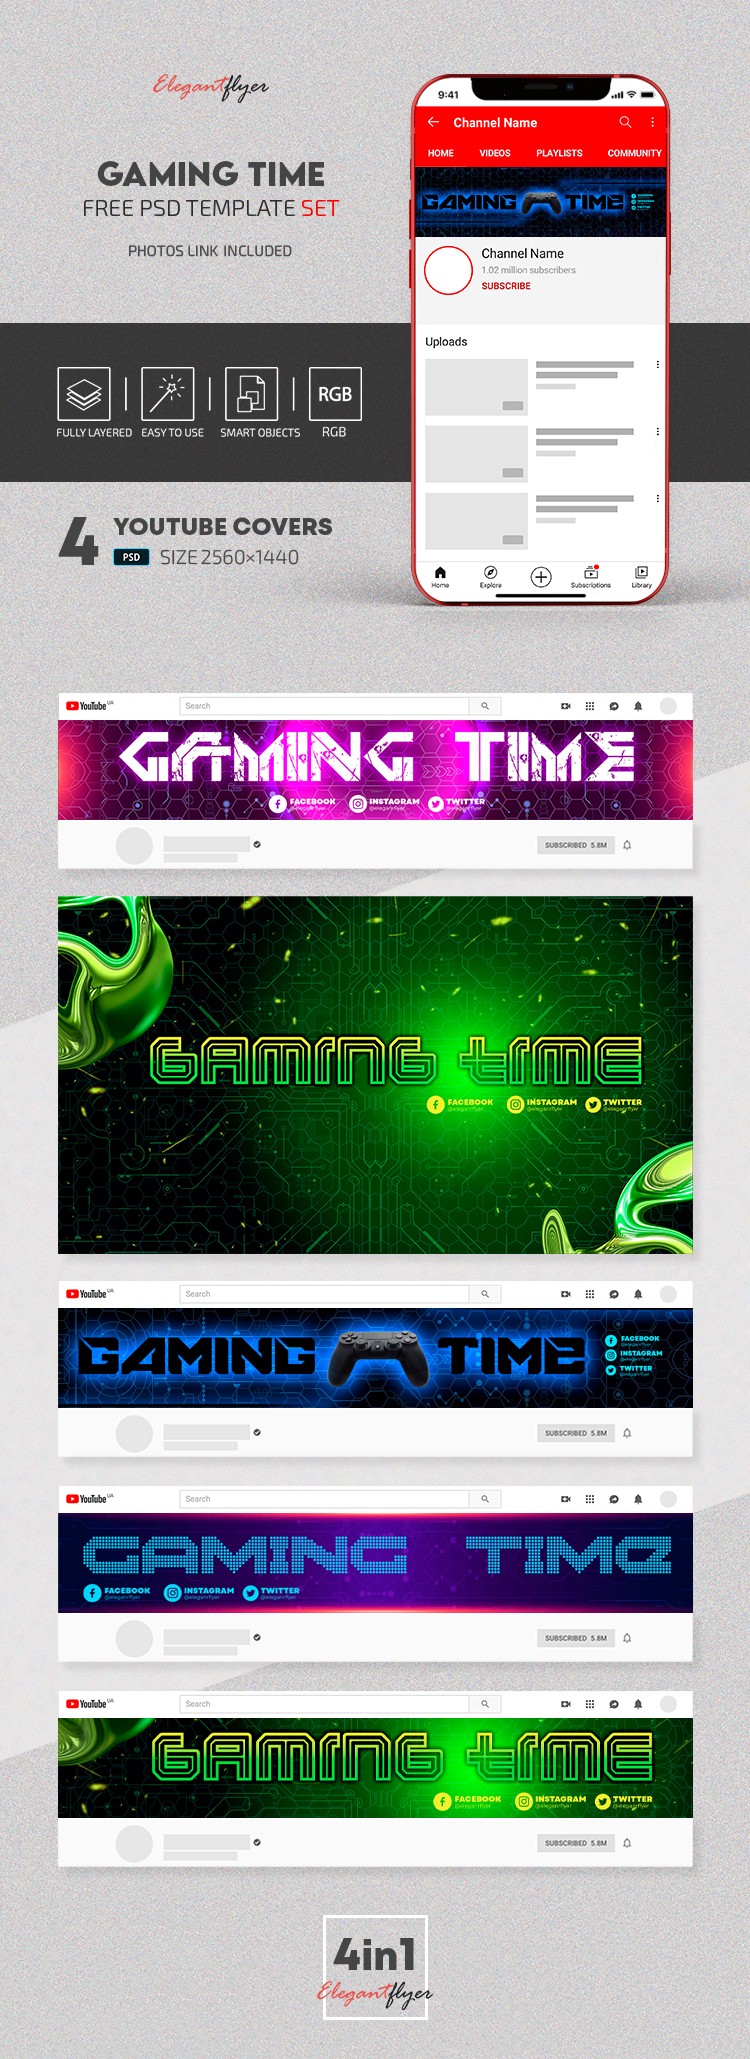 Gaming Time Youtube by ElegantFlyer